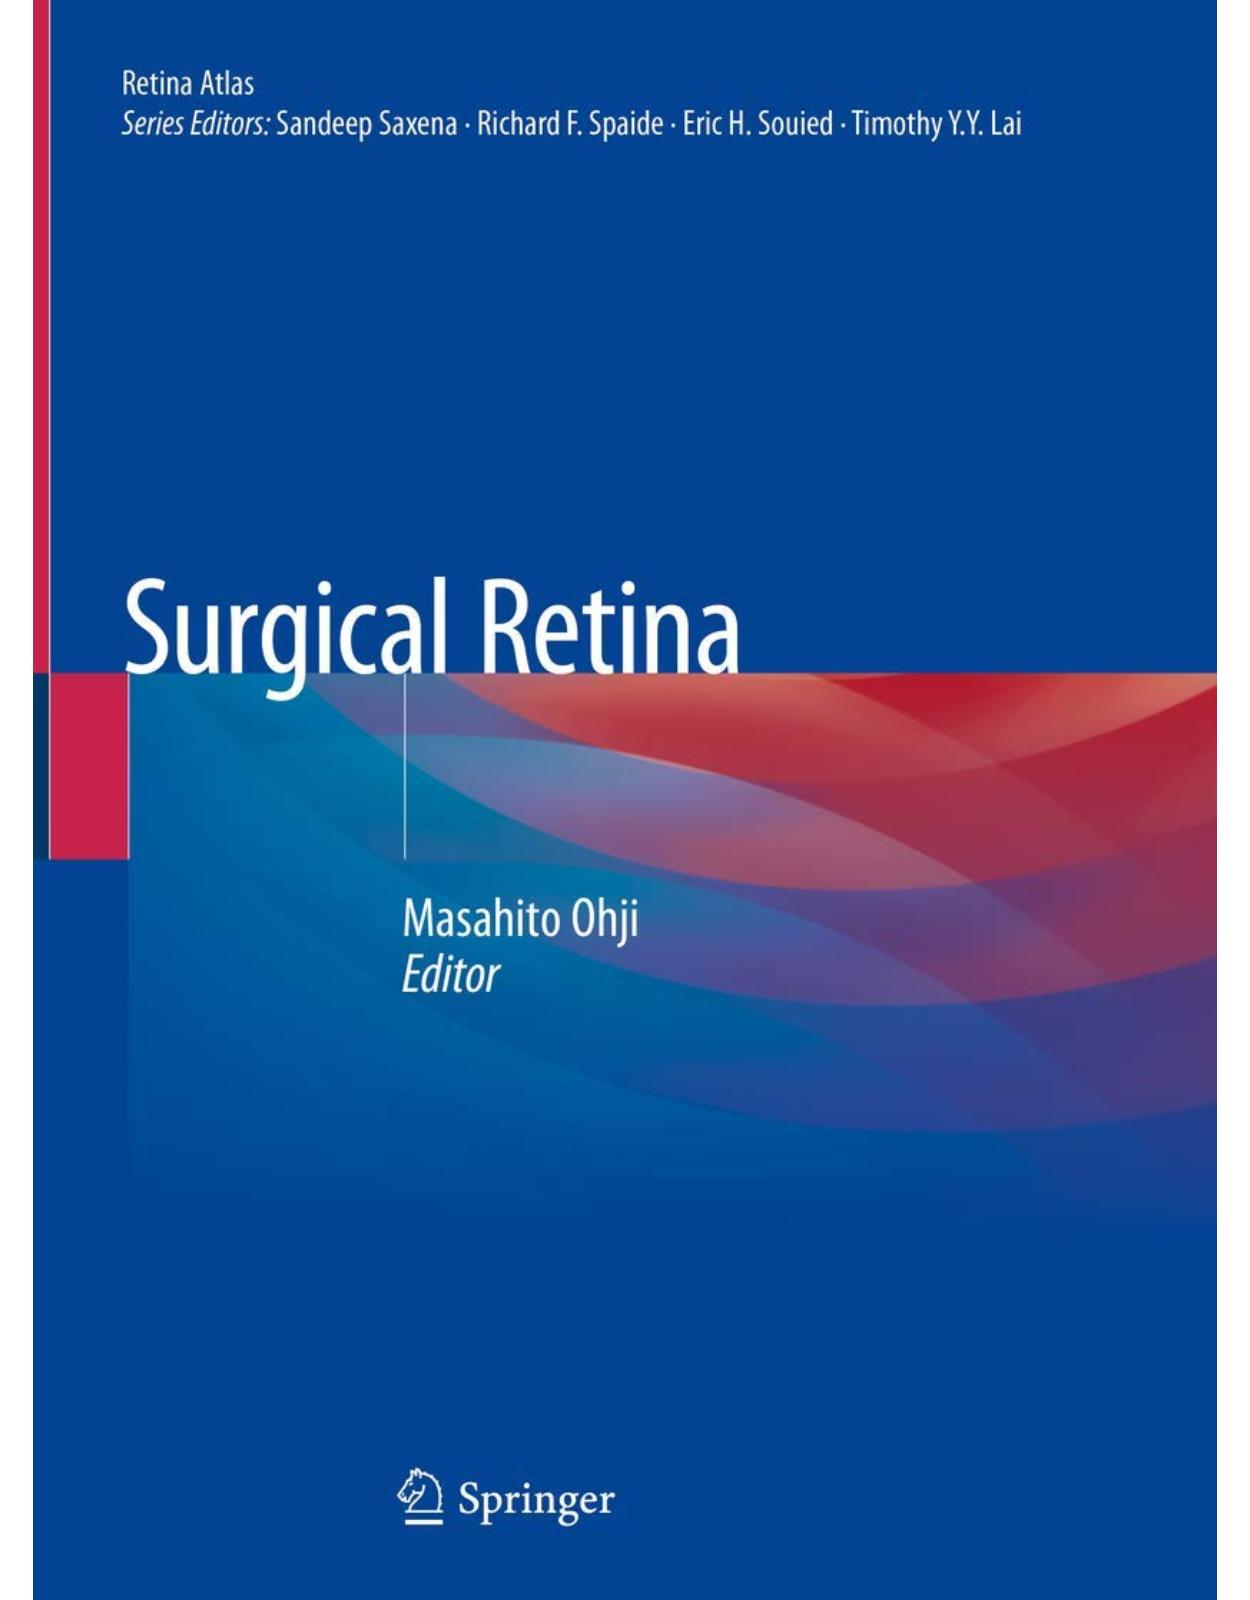 Surgical Retina (Retina Atlas)